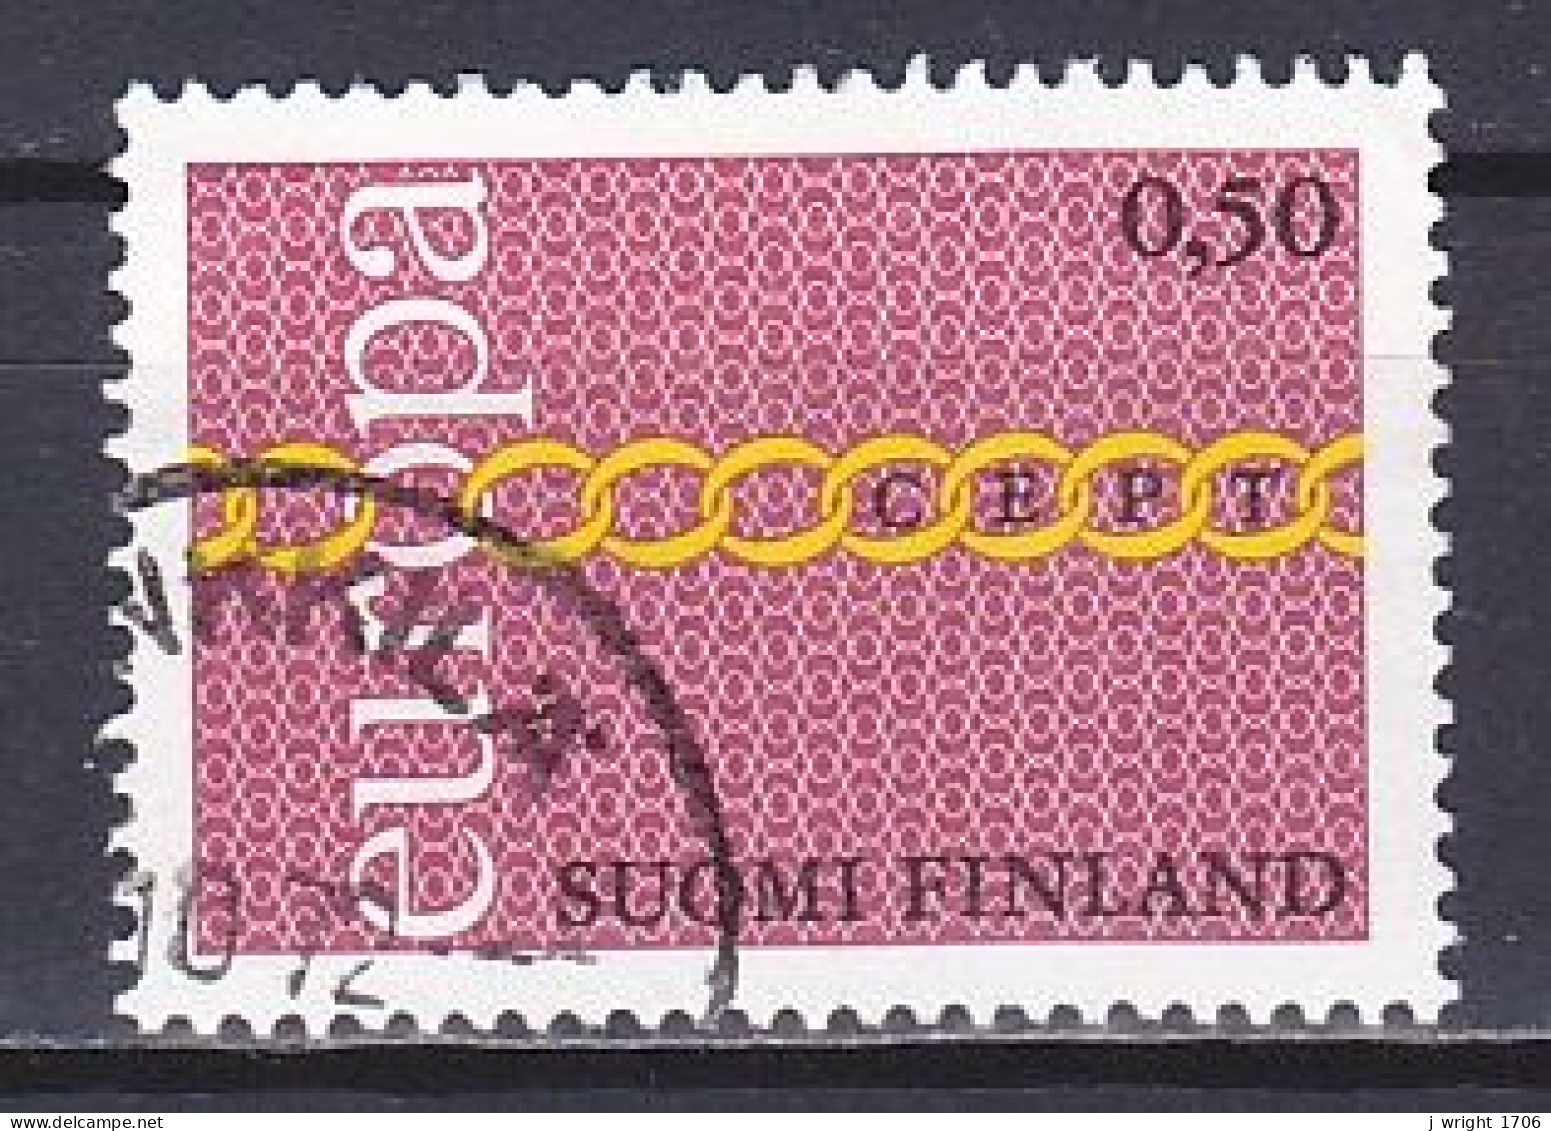 Finland, 1971, Europa CEPT, 0.50mk, USED - Gebruikt